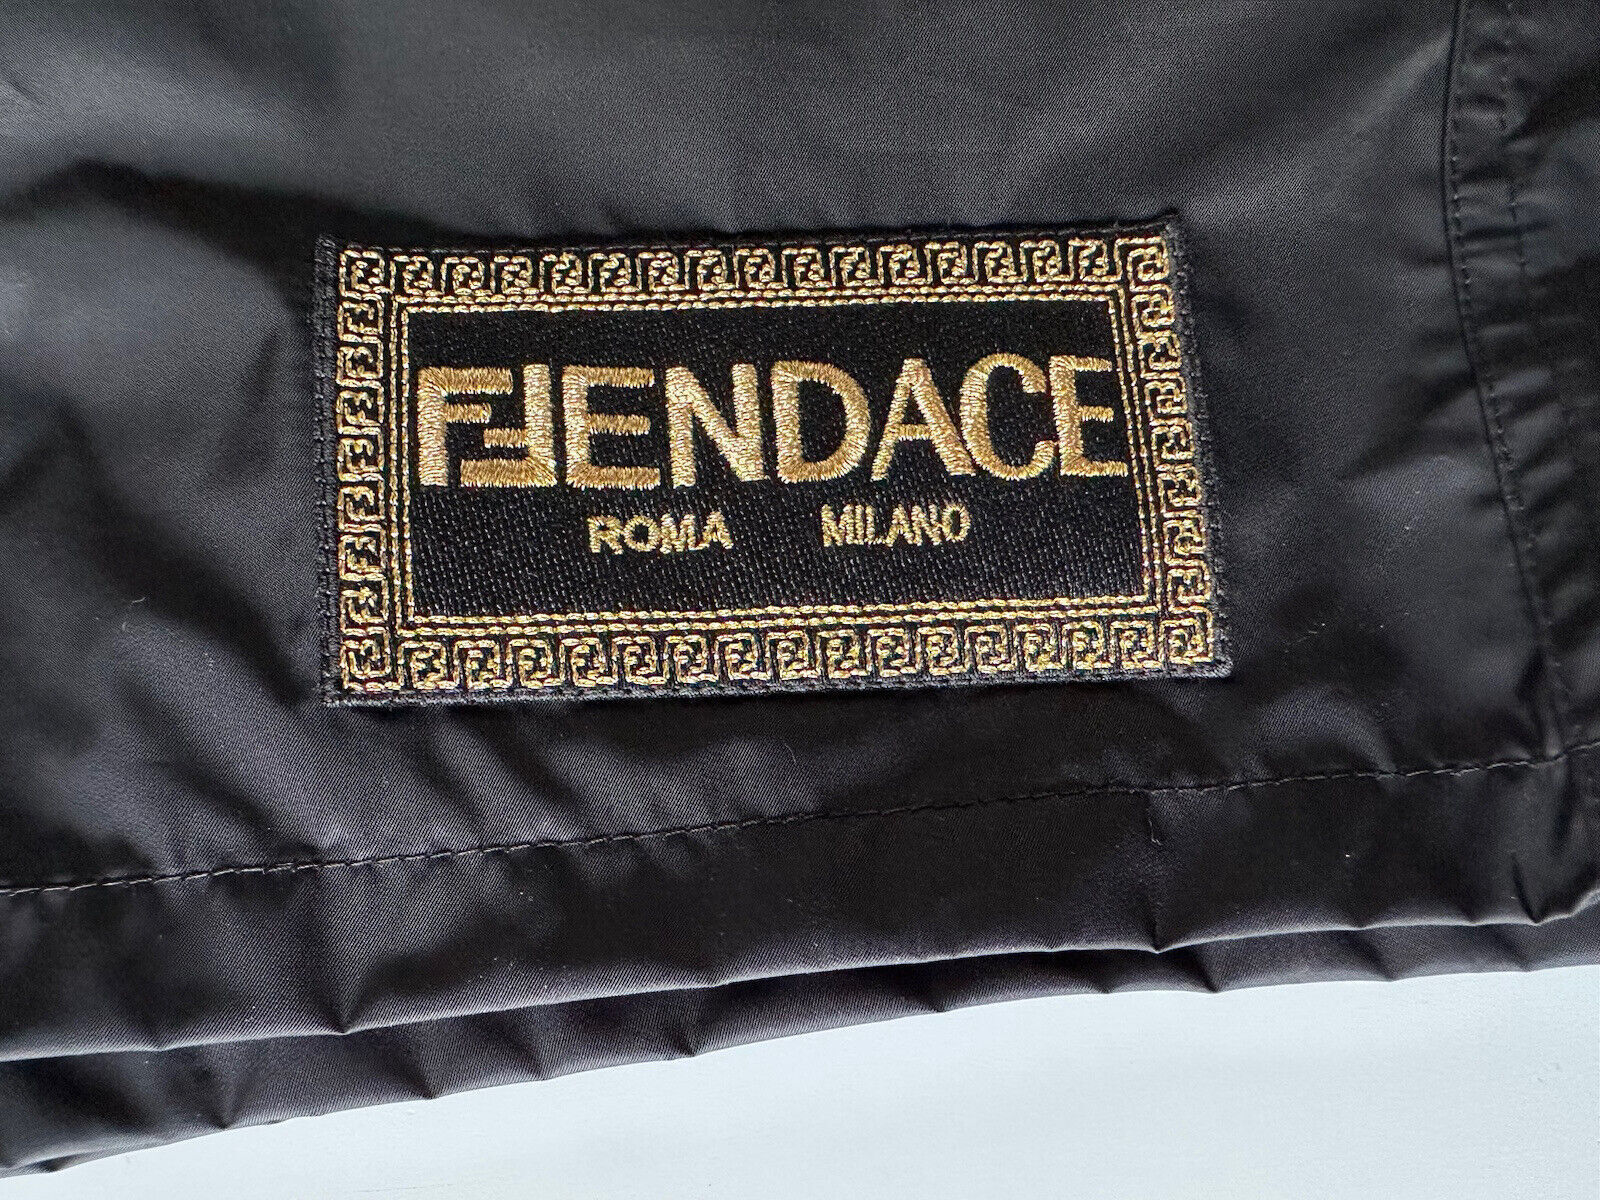 NWT $575 Versace Fendace Men's Black Boxer Swim Shorts 50 (4 US)  IT 1006614